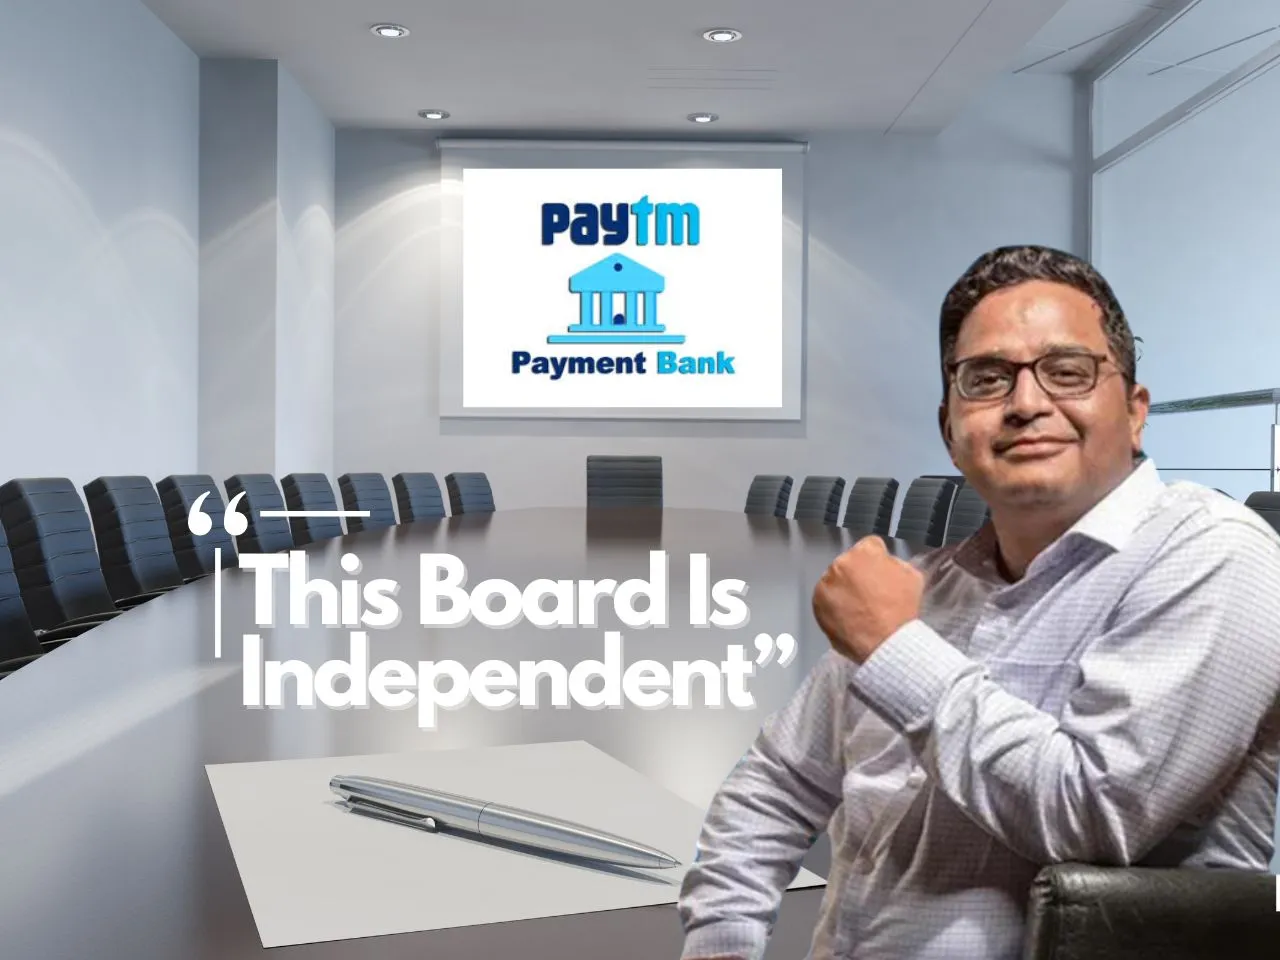 Paytm Payments Bank Board is Independent: Vijay Shekhar Sharma